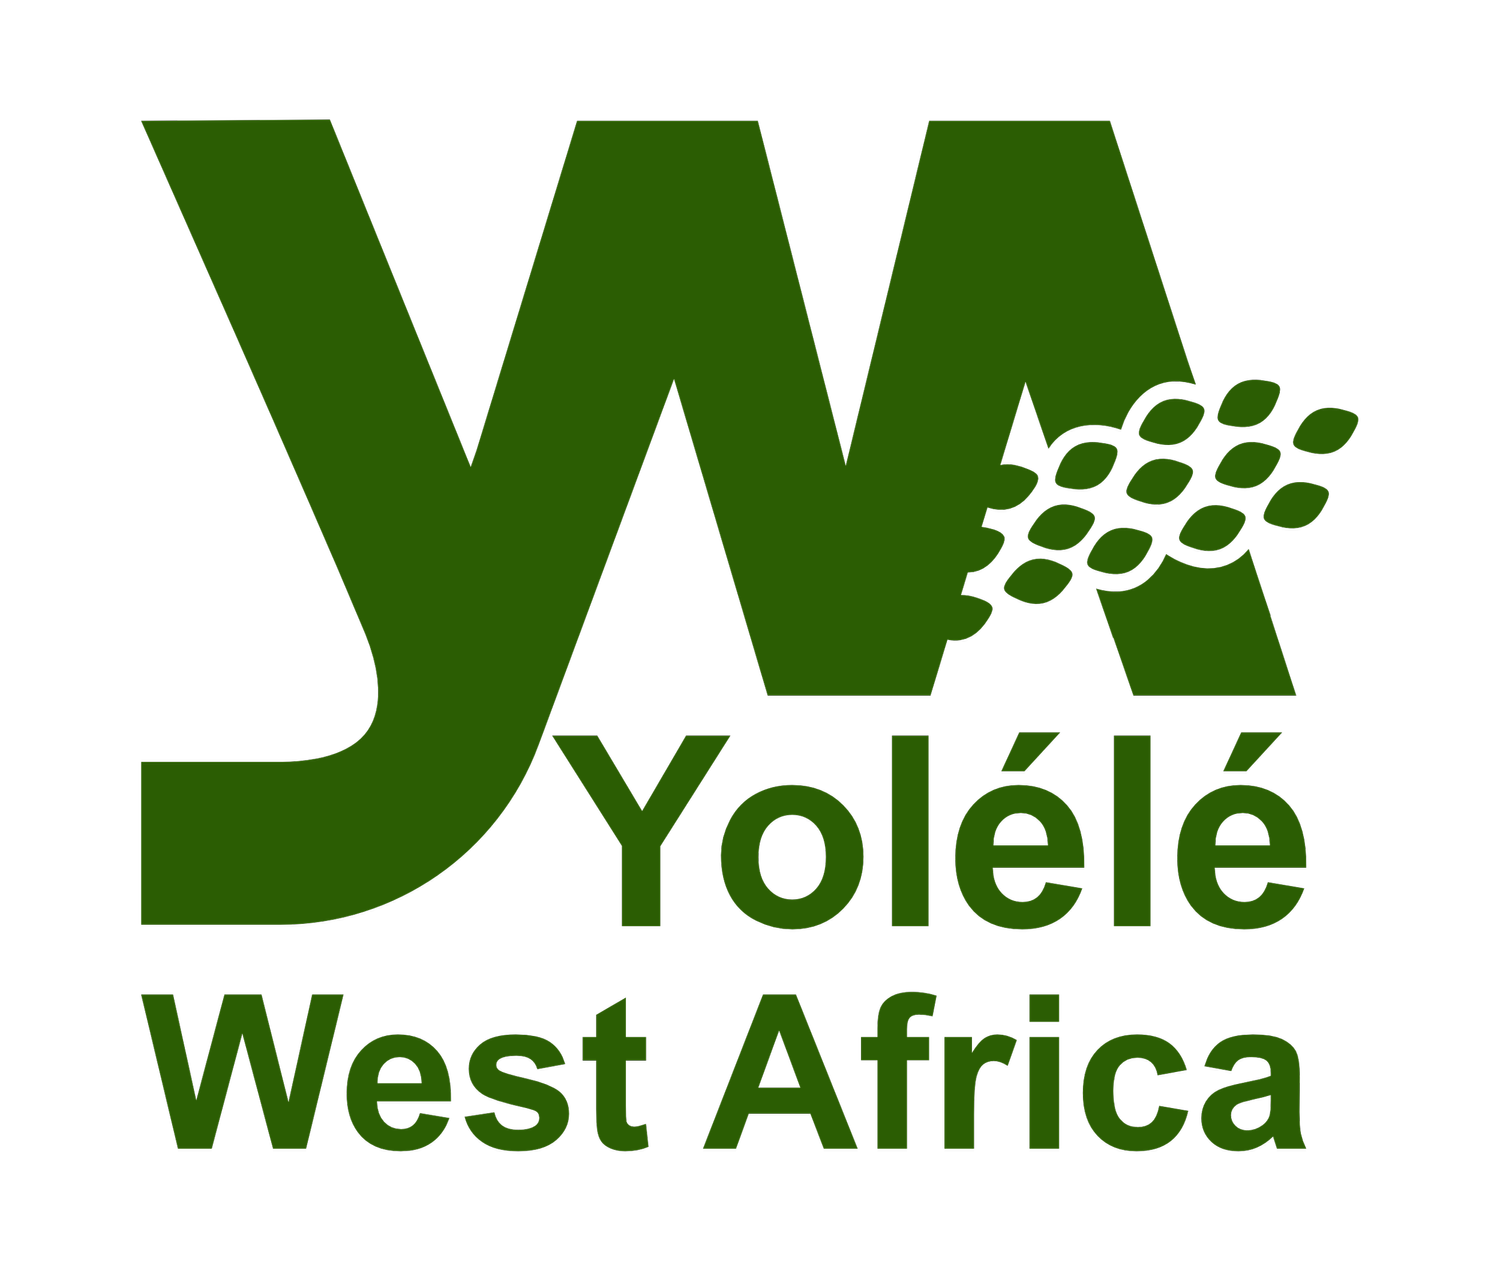 Yolélé West Africa